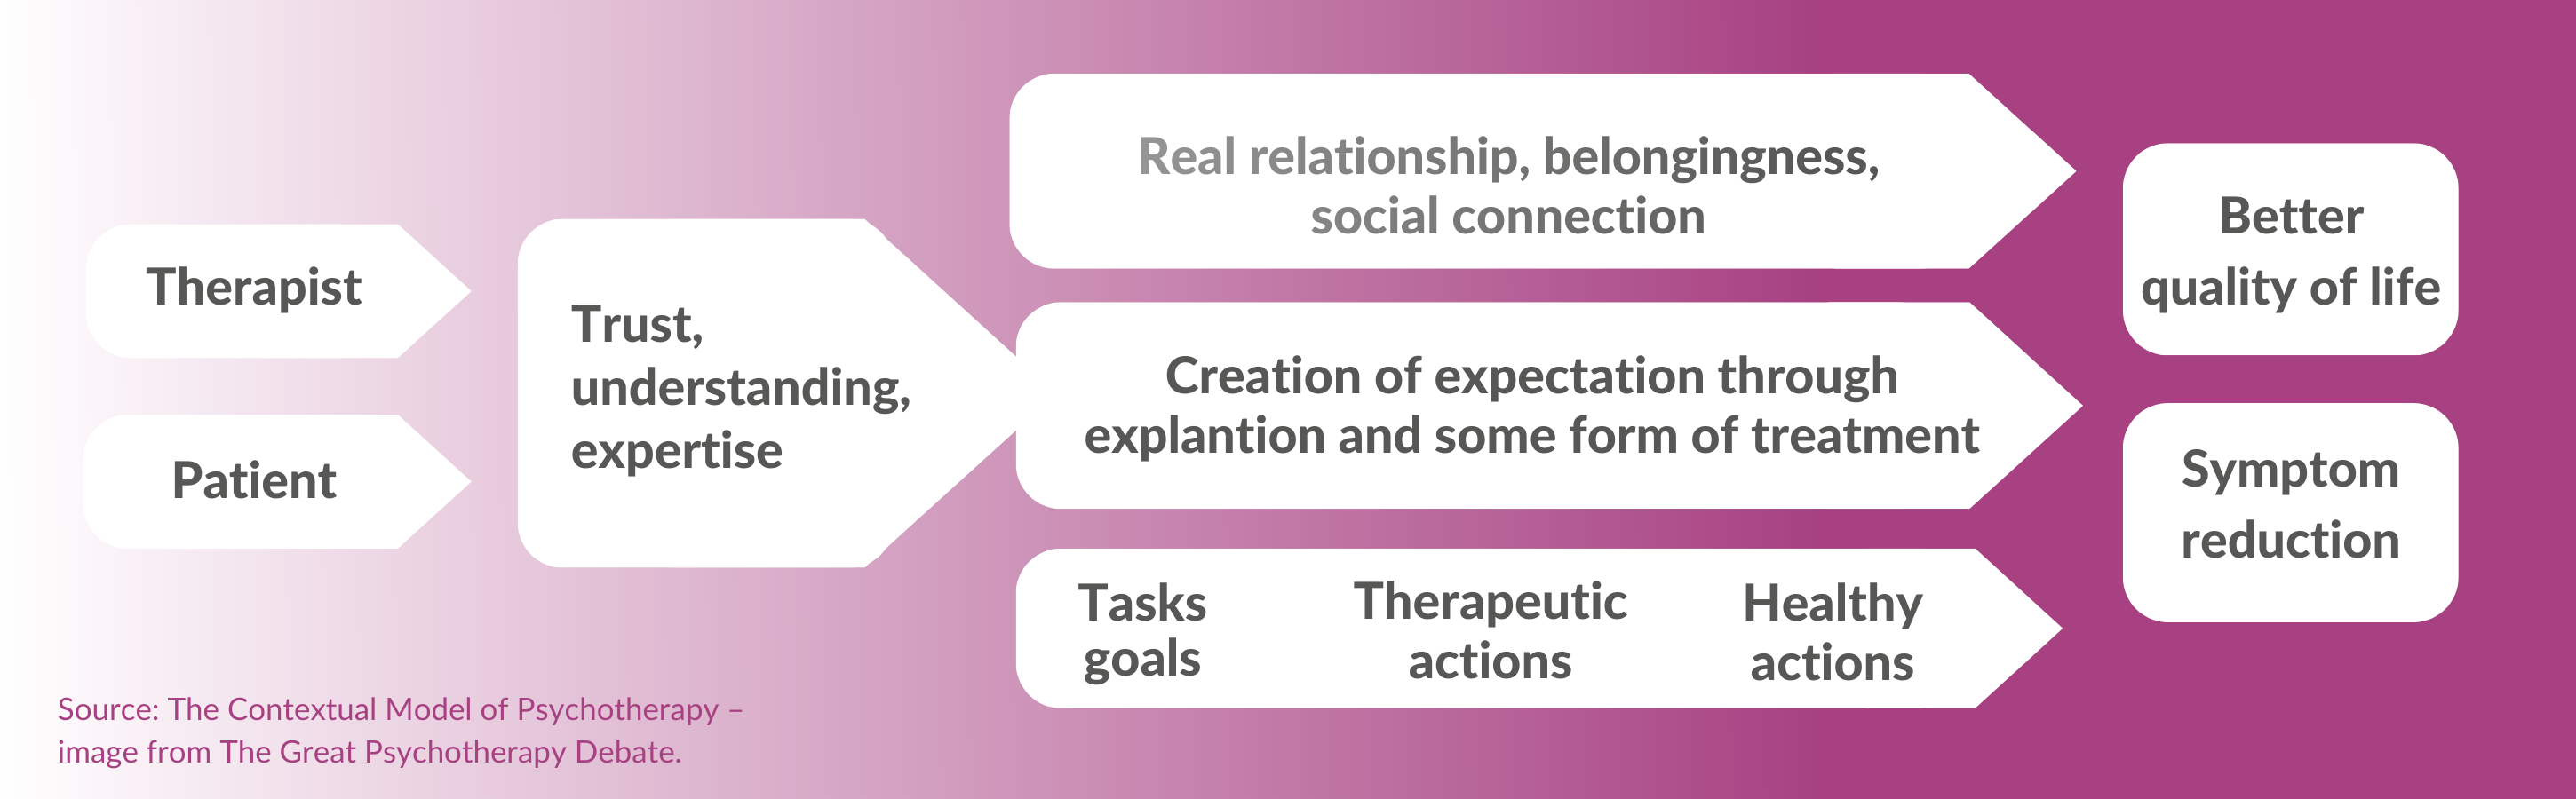 Real relationship, belongingness, social connection chart Final